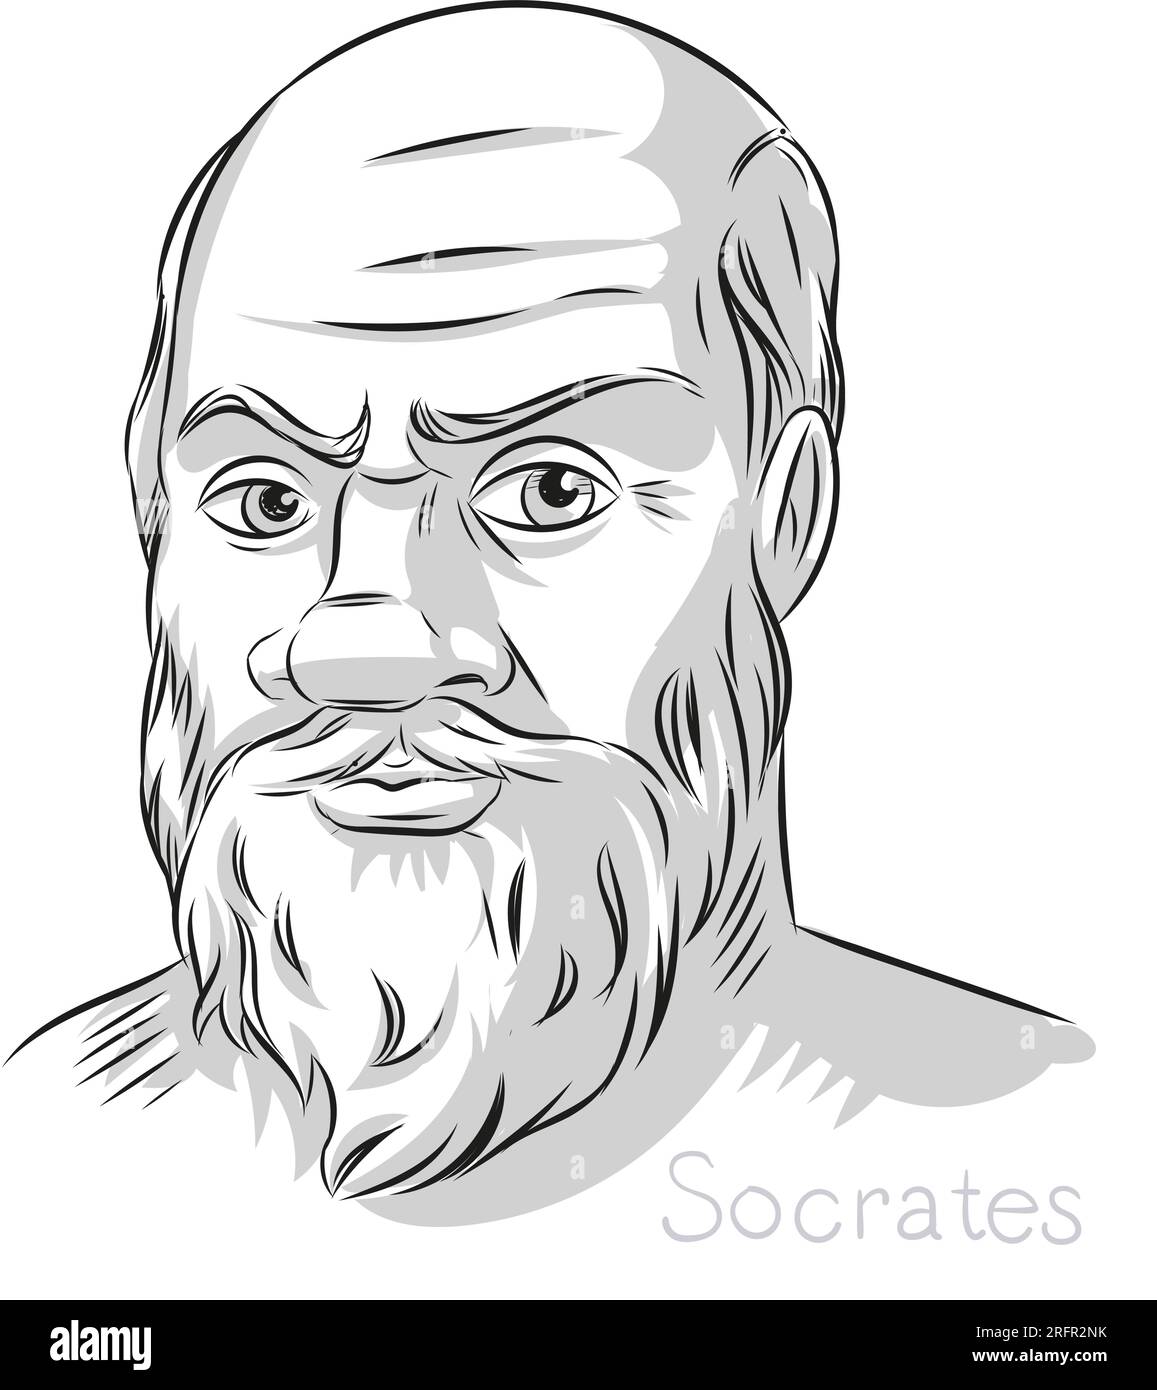 Socrates Greek Philosopher Hand drawn line art Portrait Illustration Stock Vector